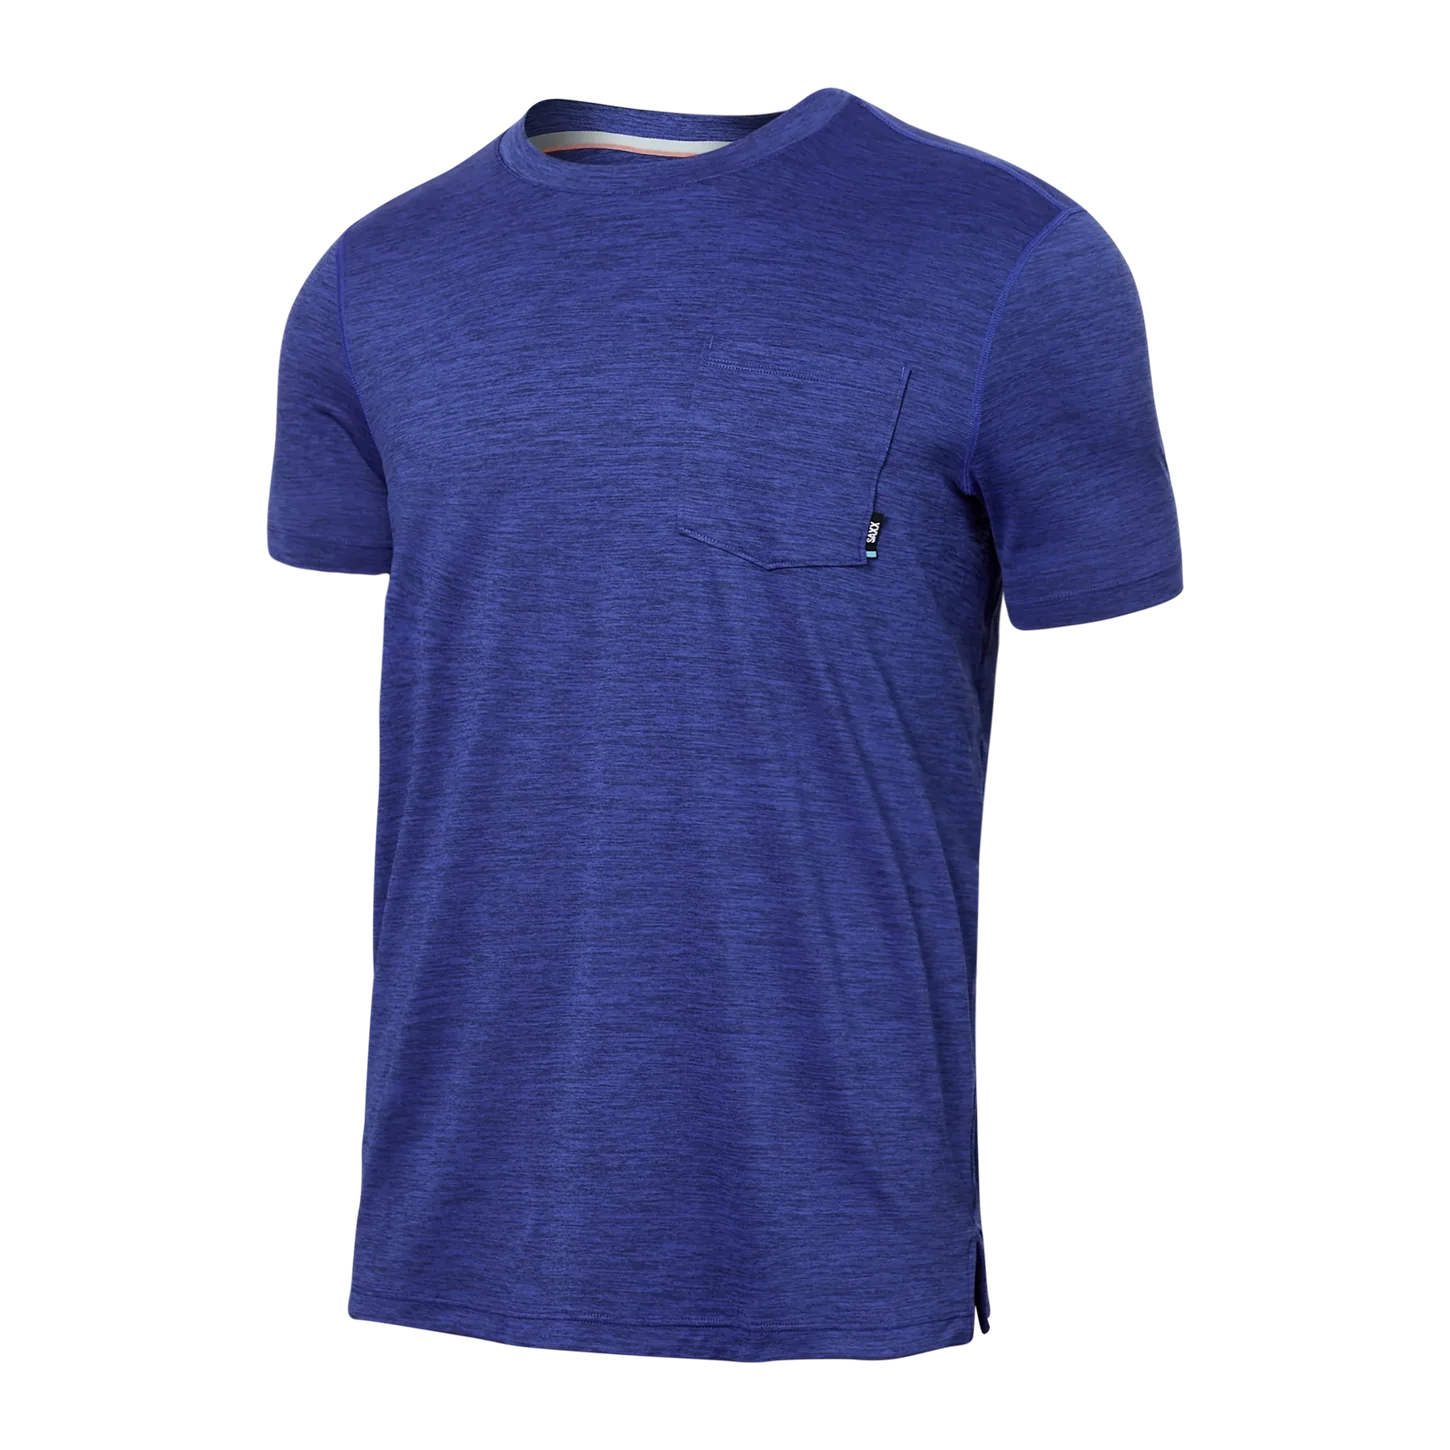 SAXX DROPTEMP TEE-Shirts & Tops-SAXX-SMALL-WASHED BLUE HEATHER-Coriander